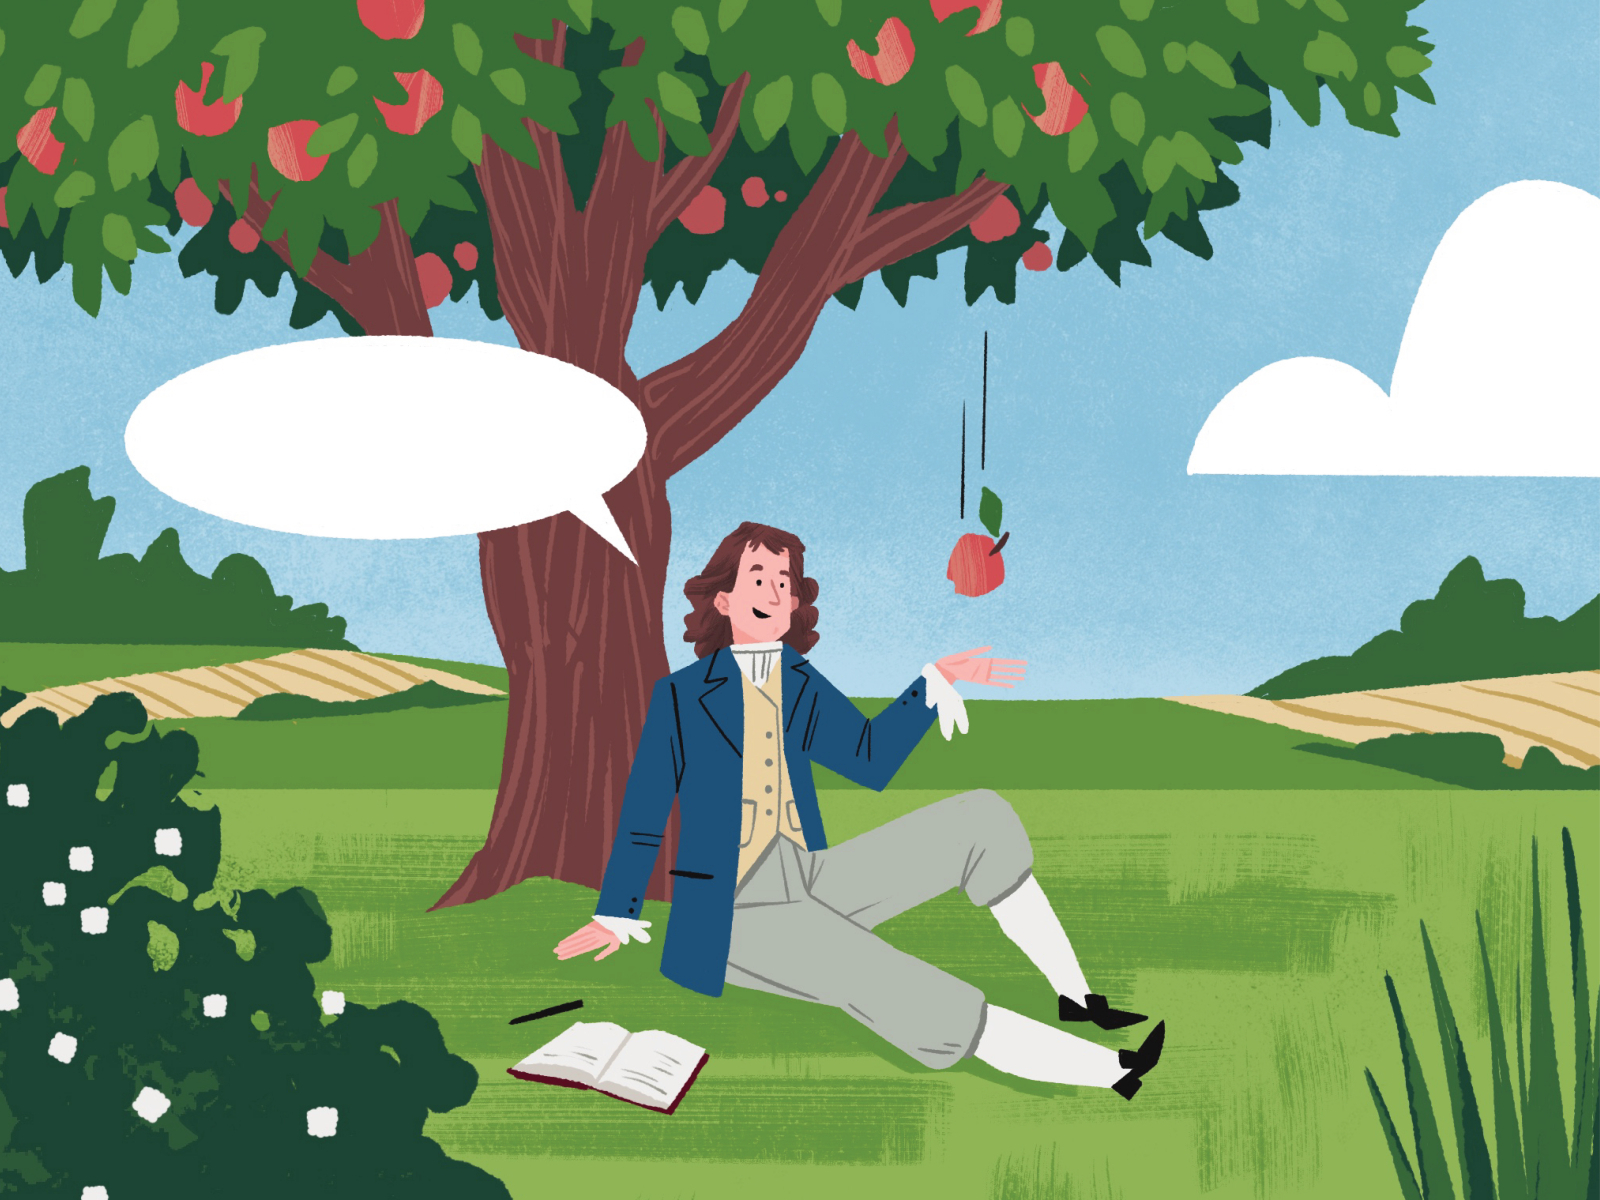 Isaac Newton and Gravity by Drew Bardana on Dribbble